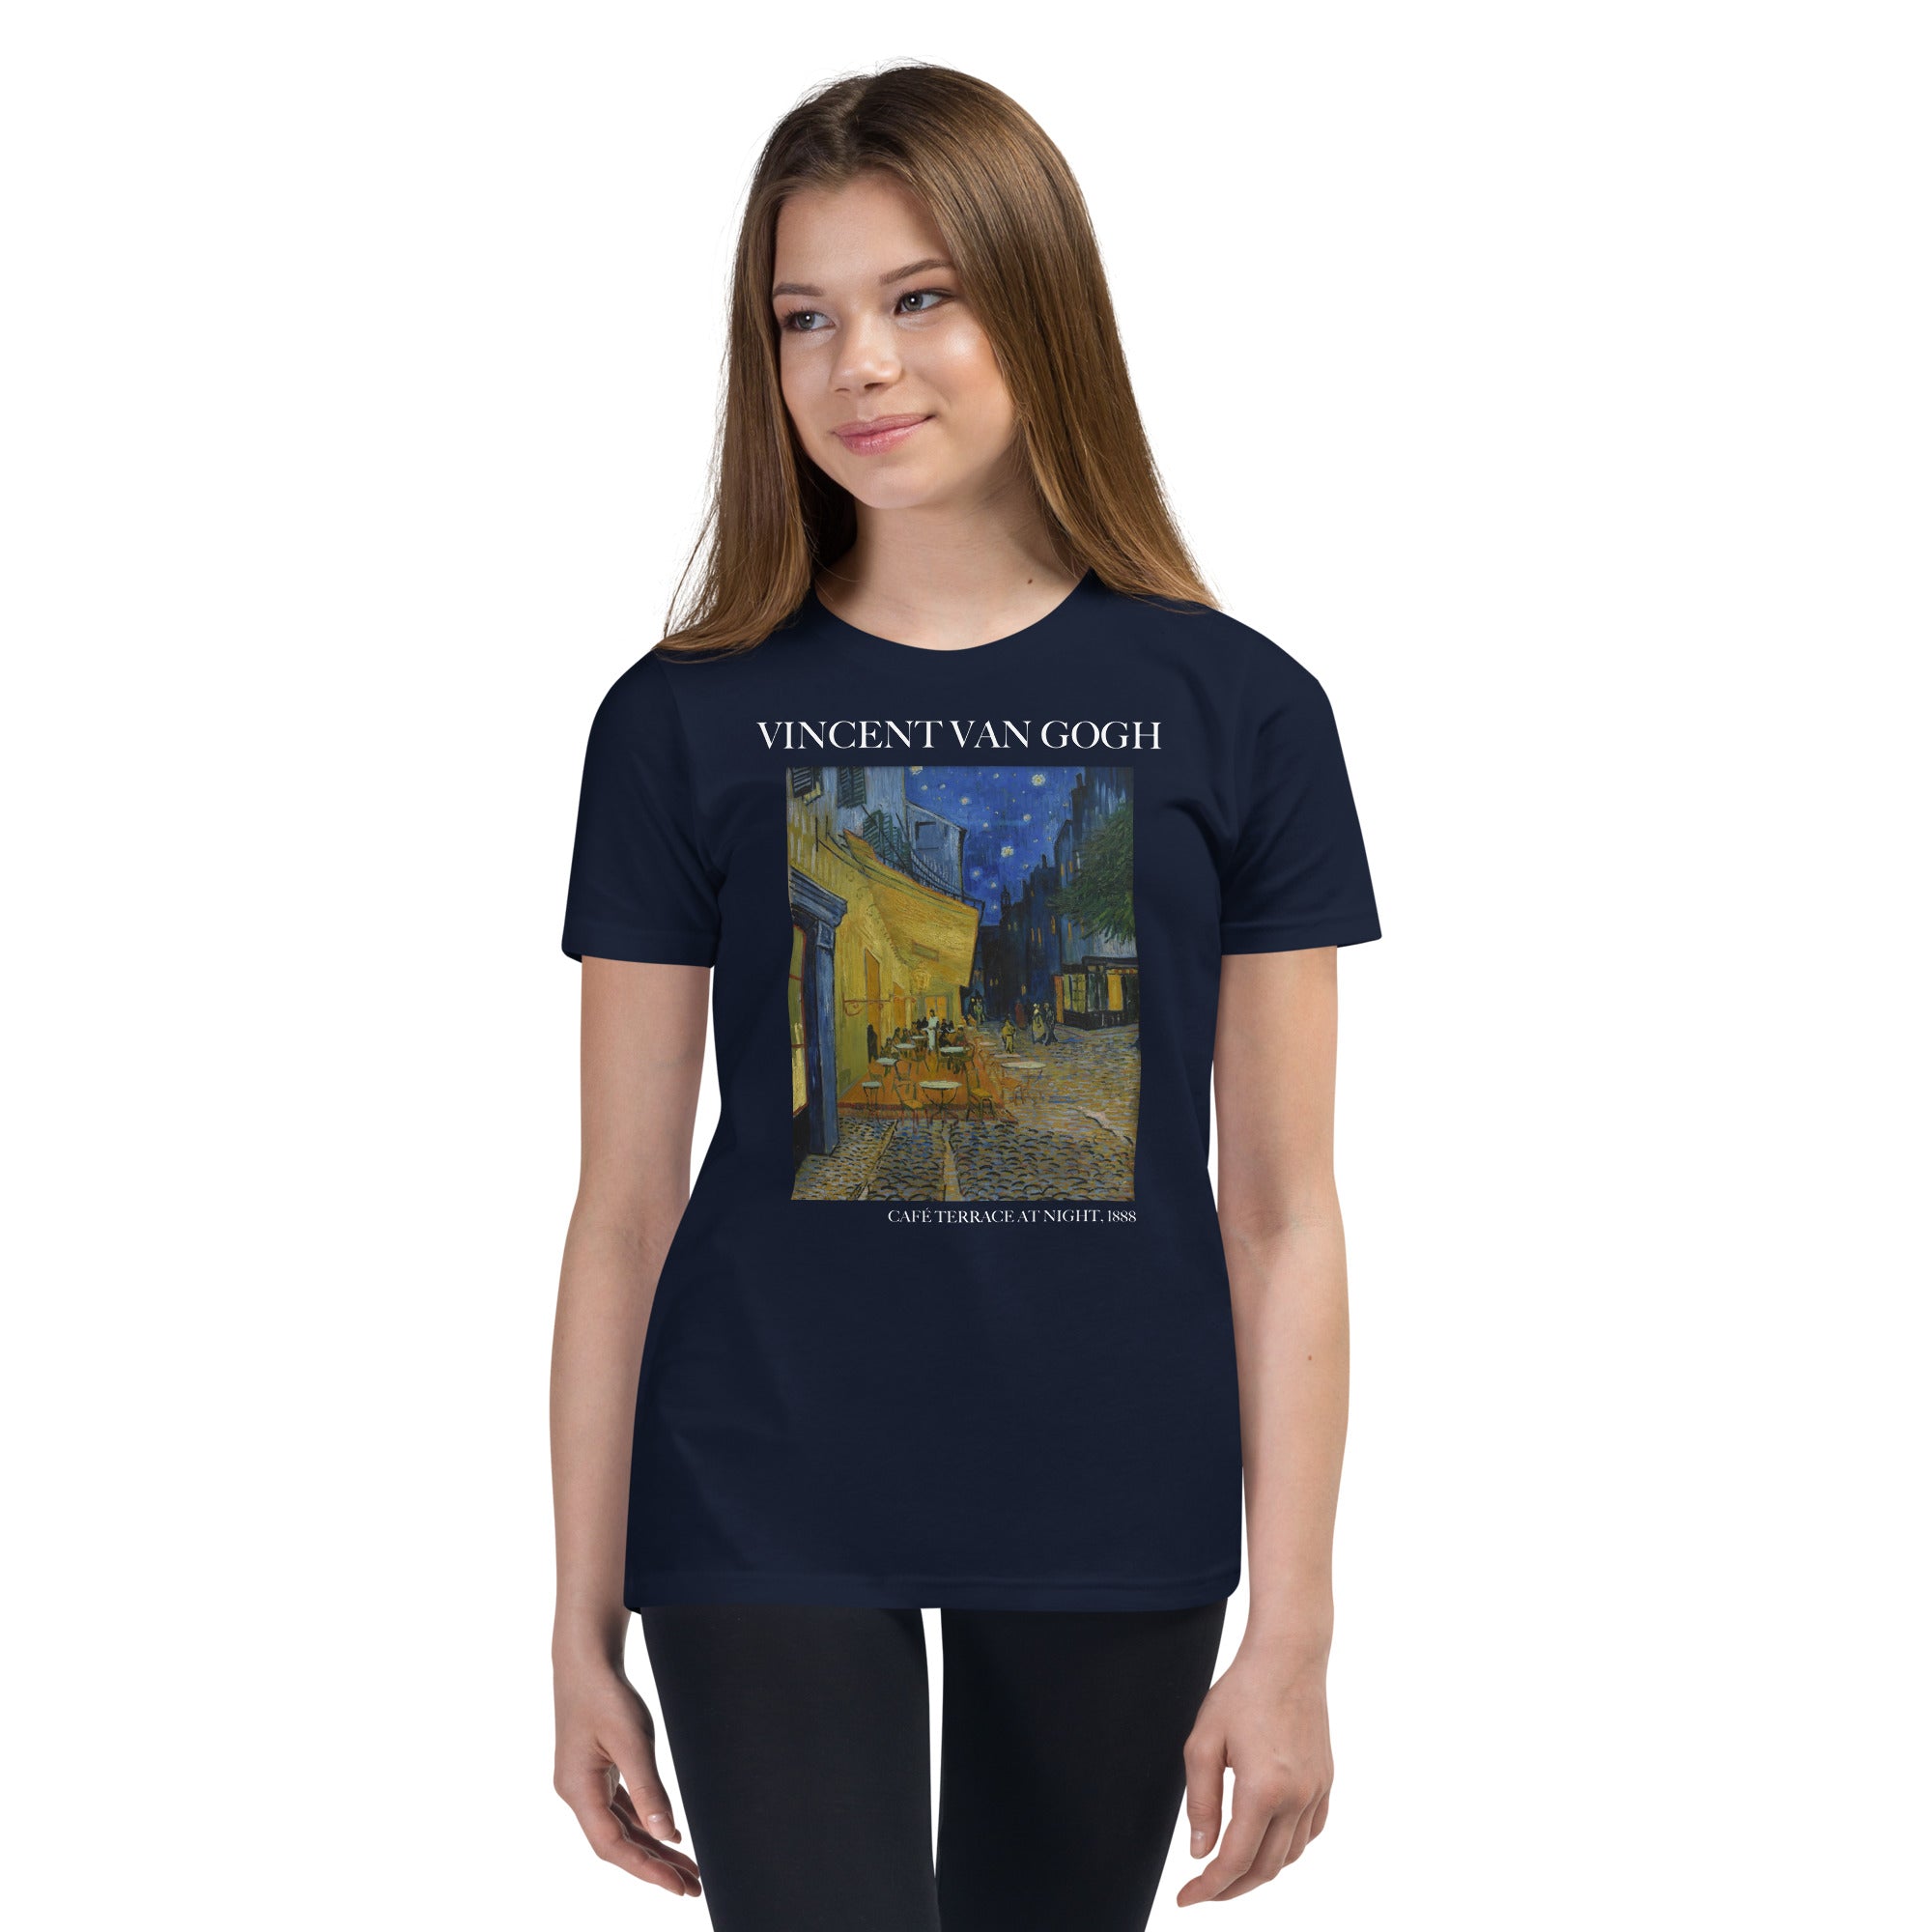 Vincent van Gogh 'Café Terrace at Night' Famous Painting Short Sleeve T-Shirt | Premium Youth Art Tee